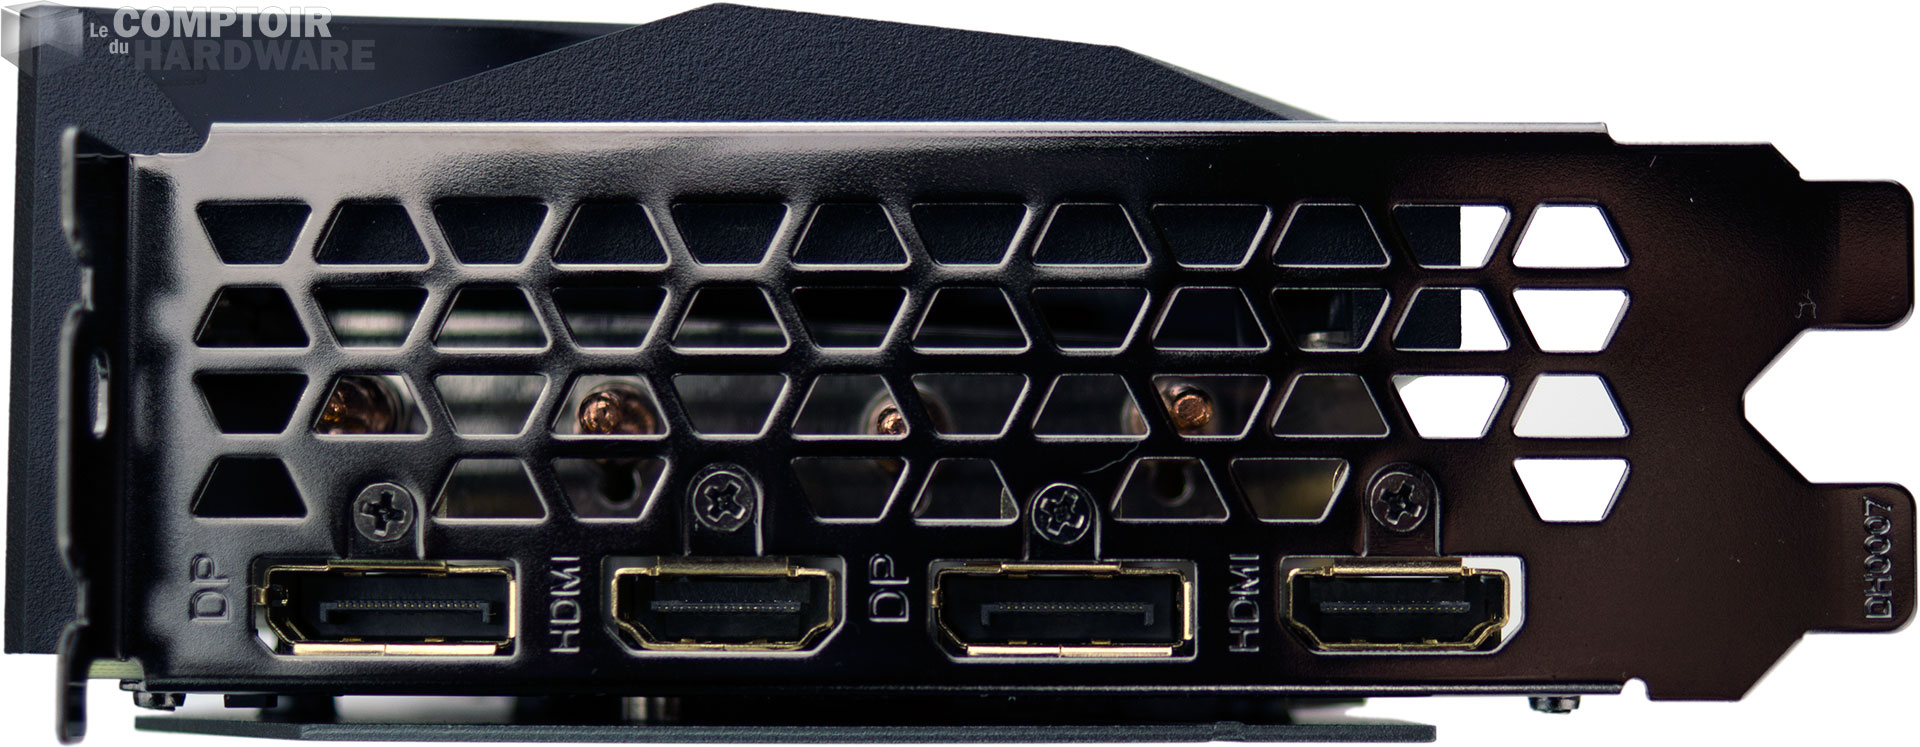 Gigabyte RTX 3060 Ti Gaming OC Pro : connectique